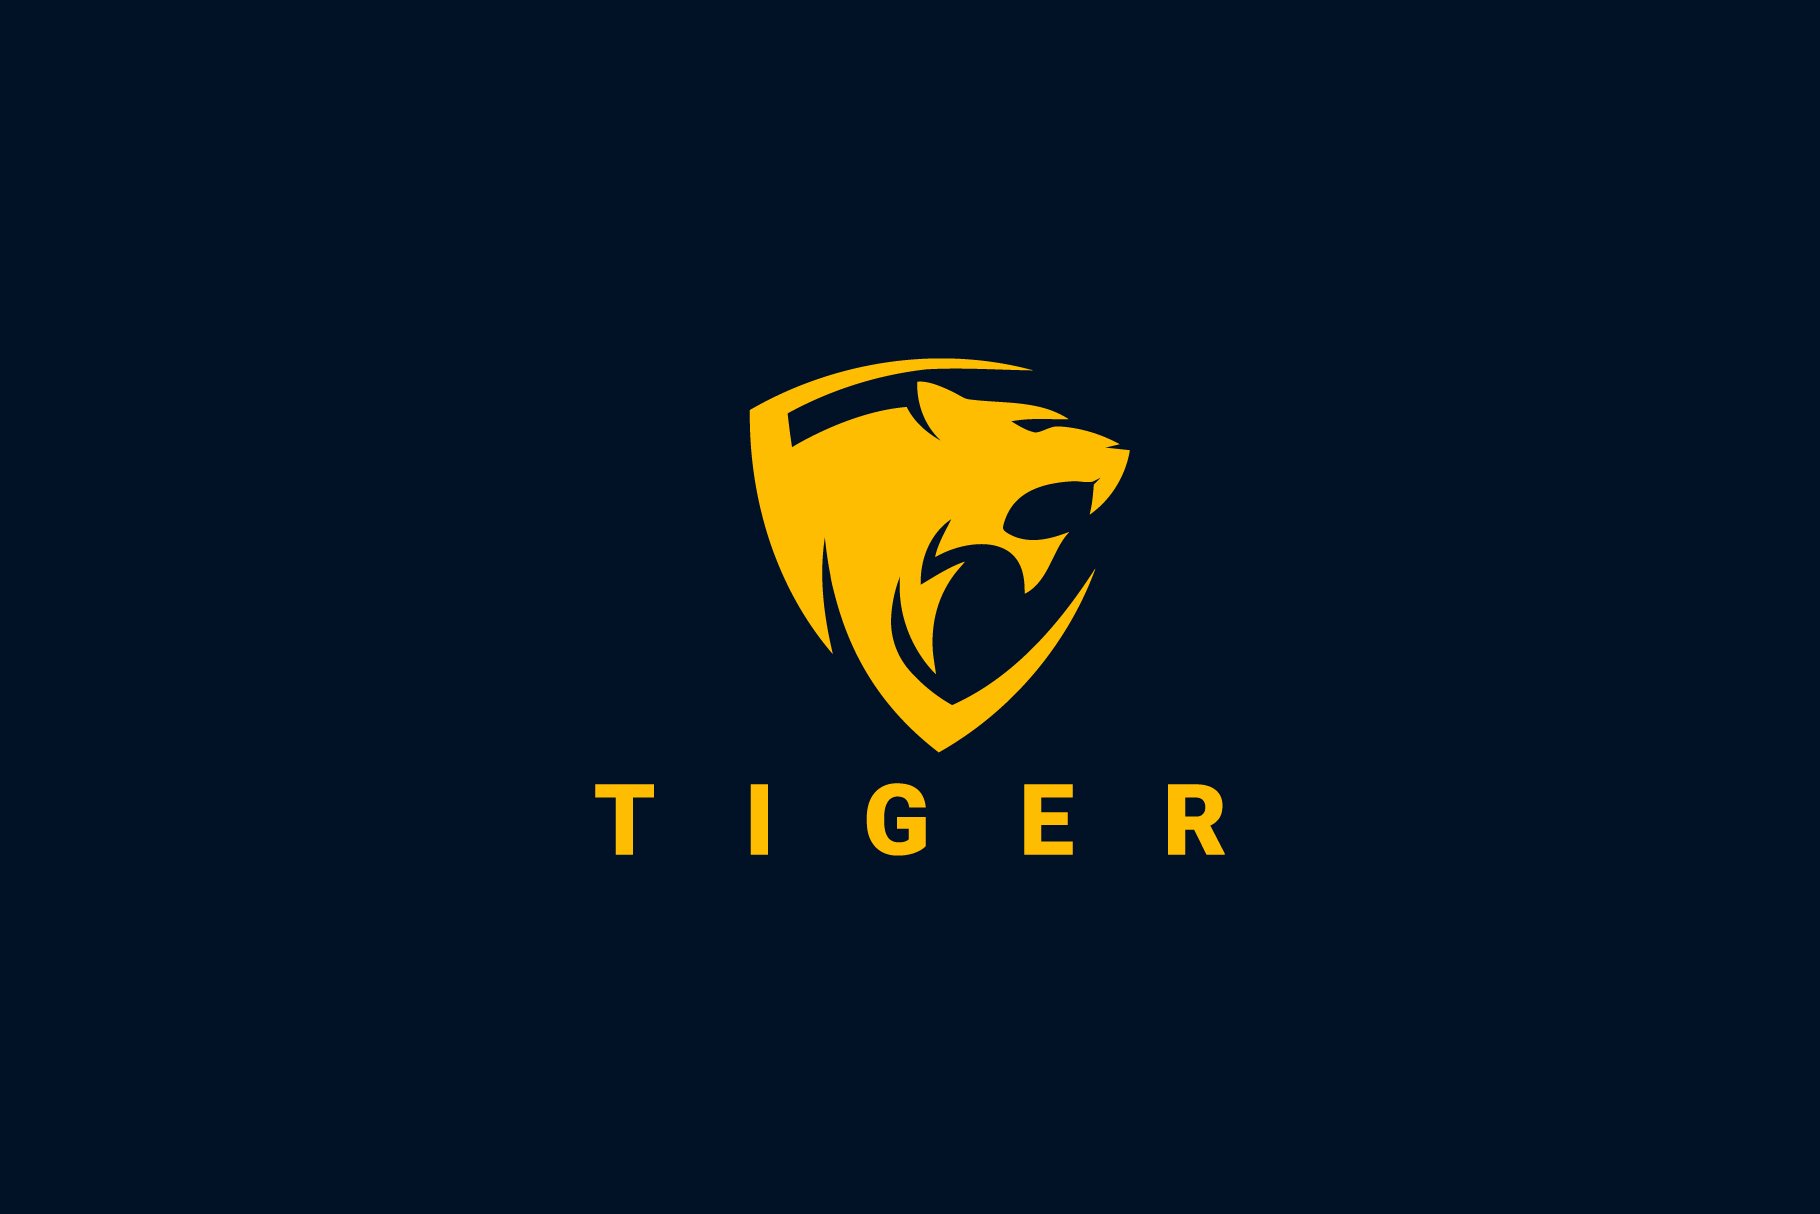 Tiger Logo cover image.